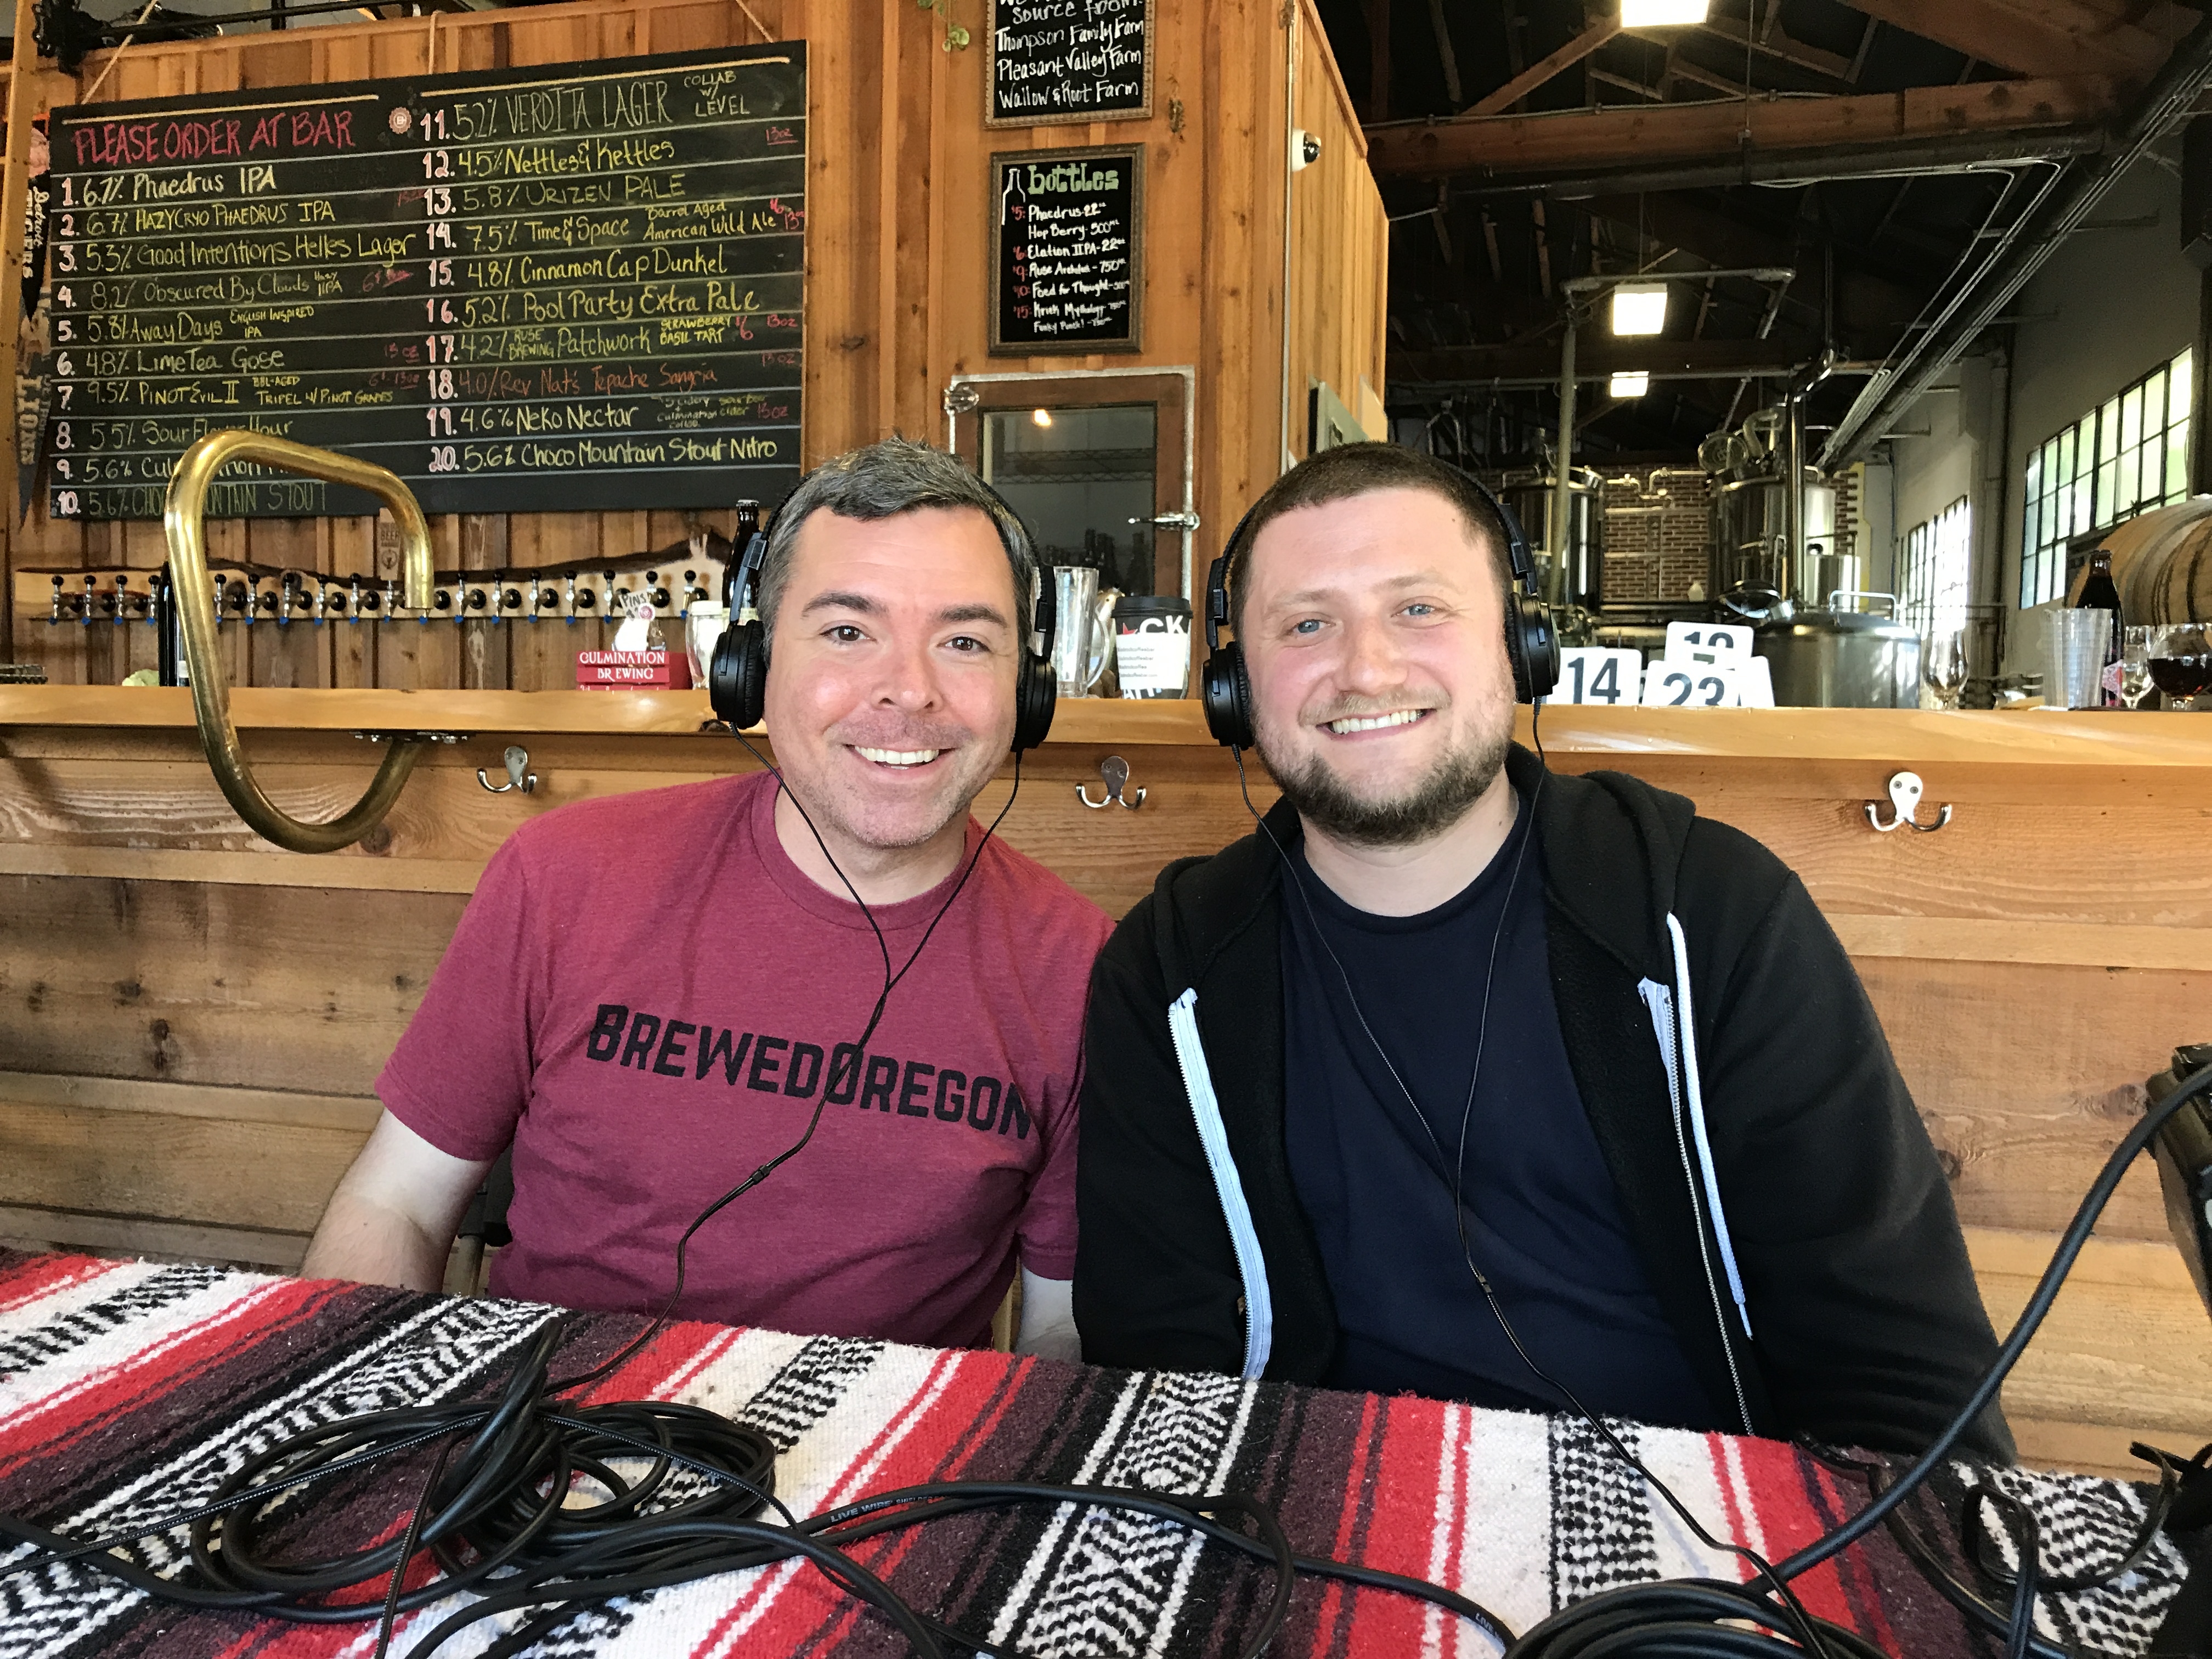 Bailey’s Taproom – Portland Beer Podcast Episode 46